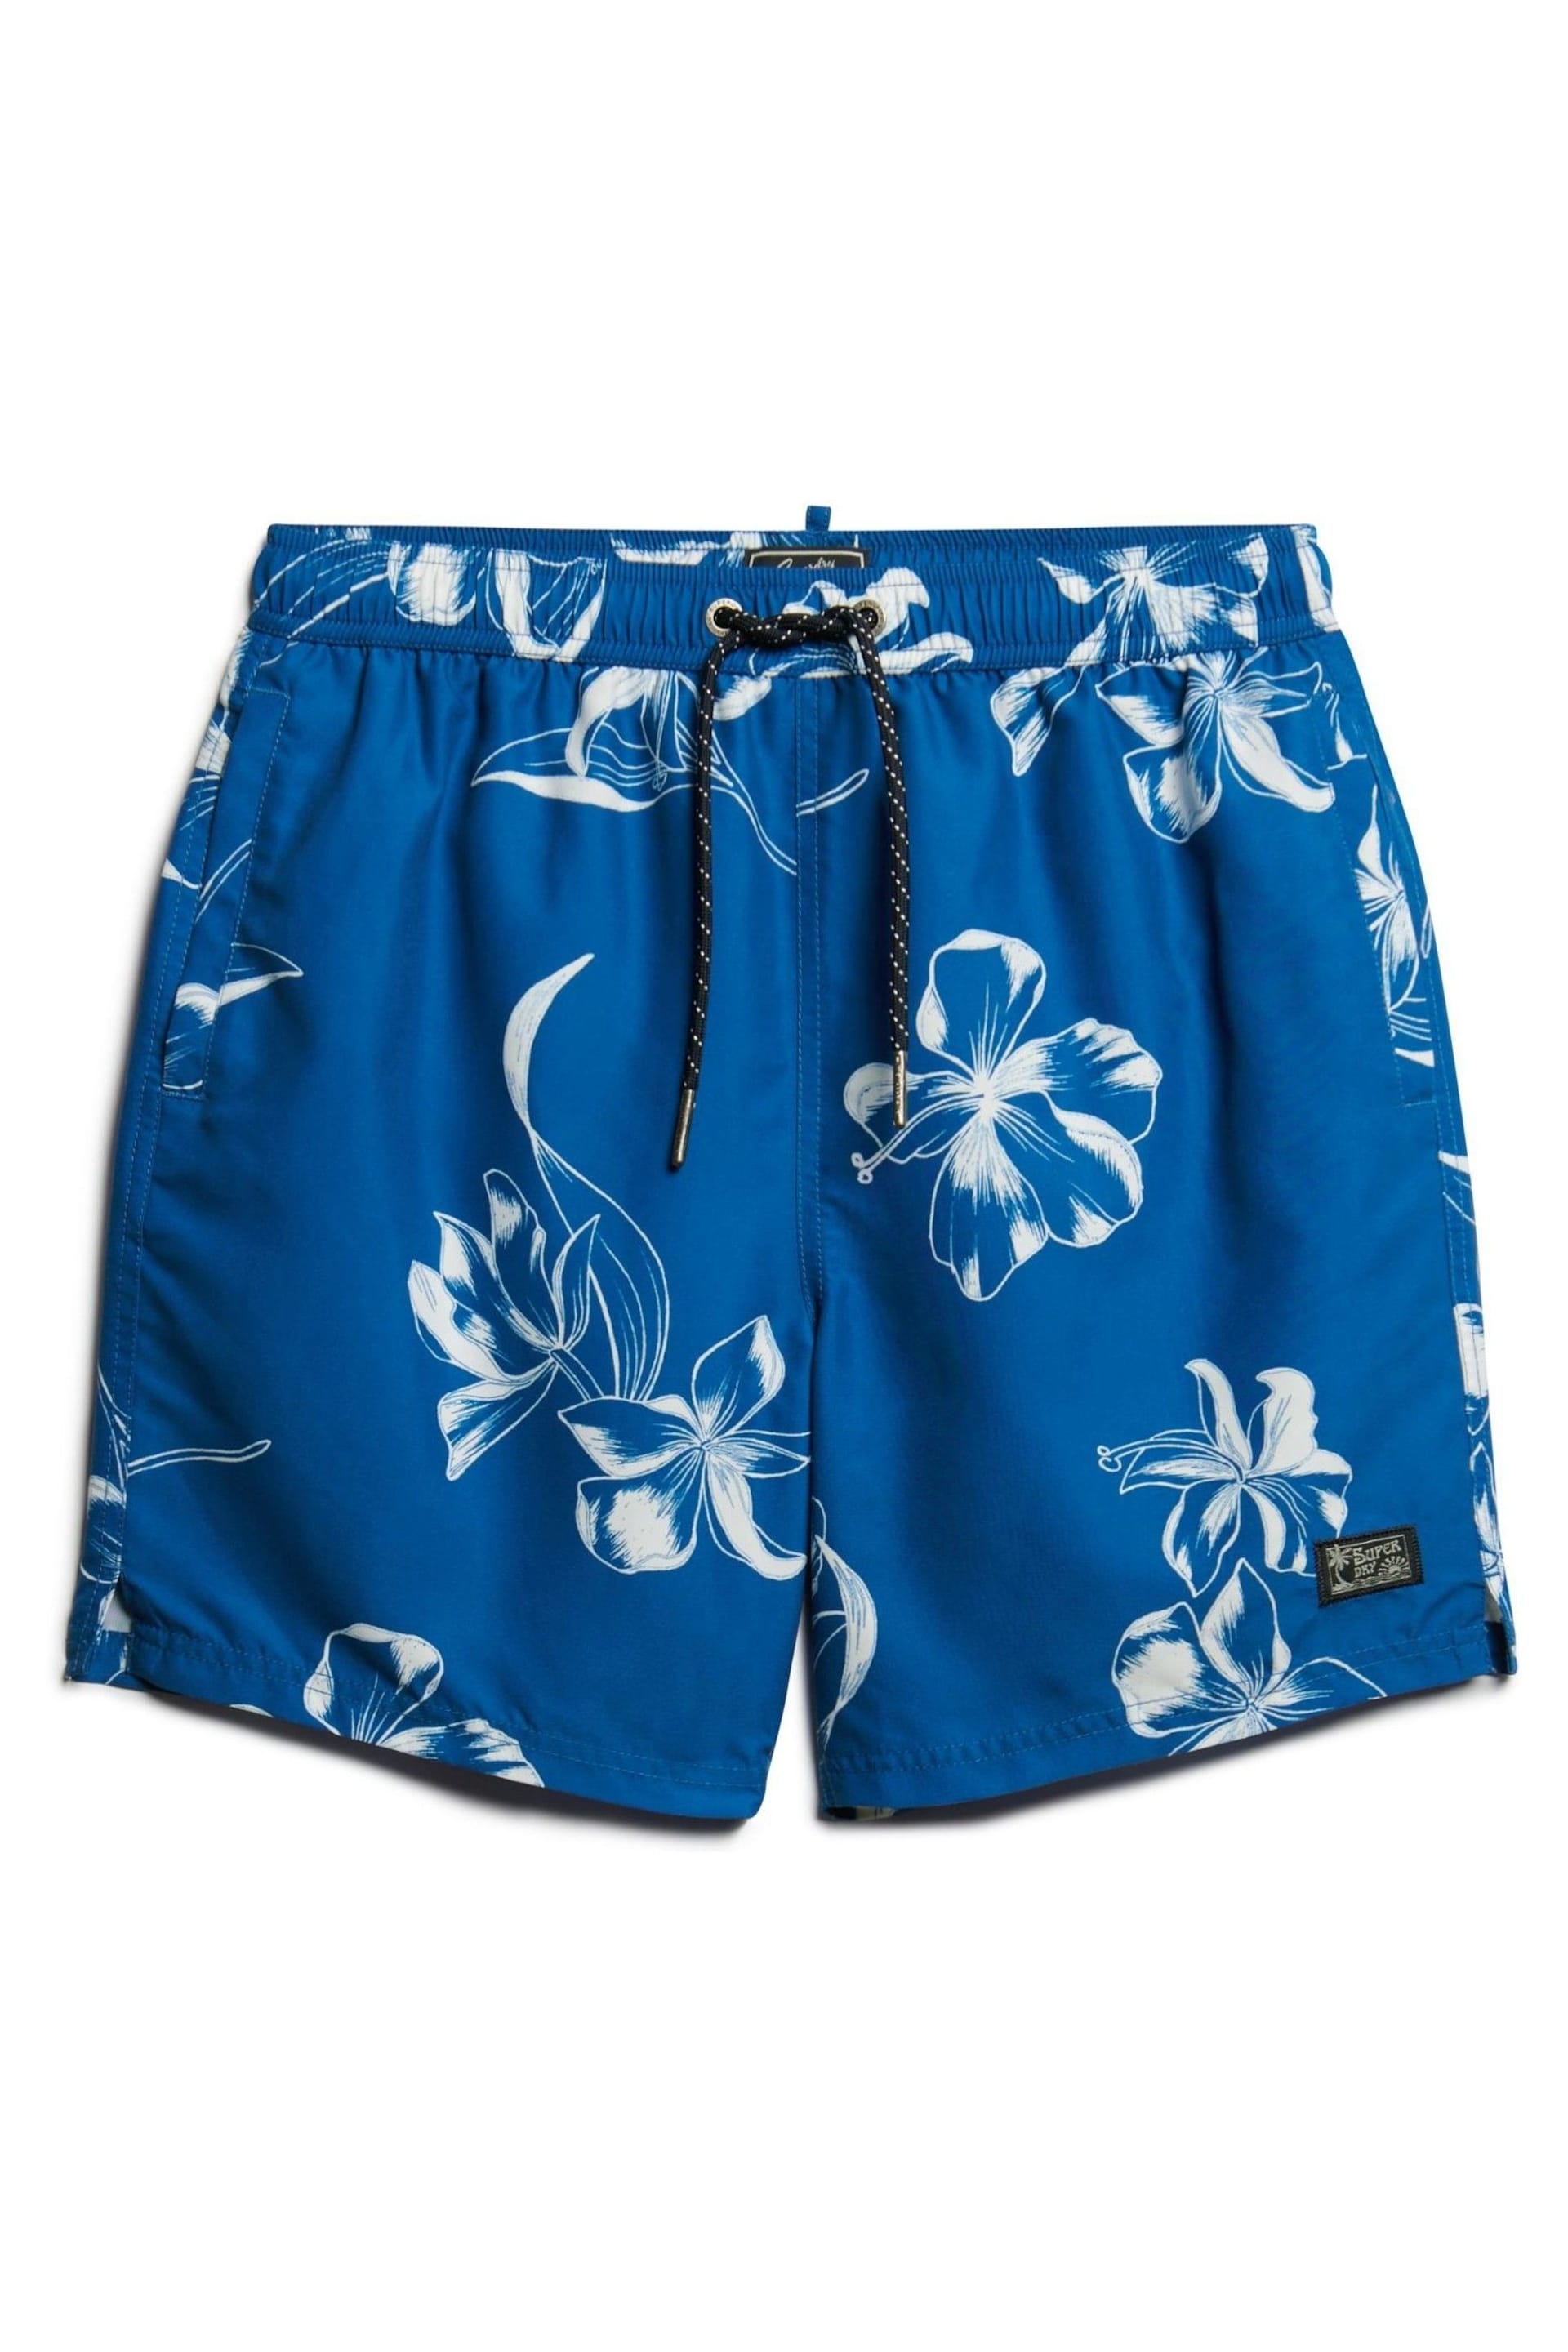 Superdry Blue Vintage Hawaiian Swim Shorts - Image 6 of 7